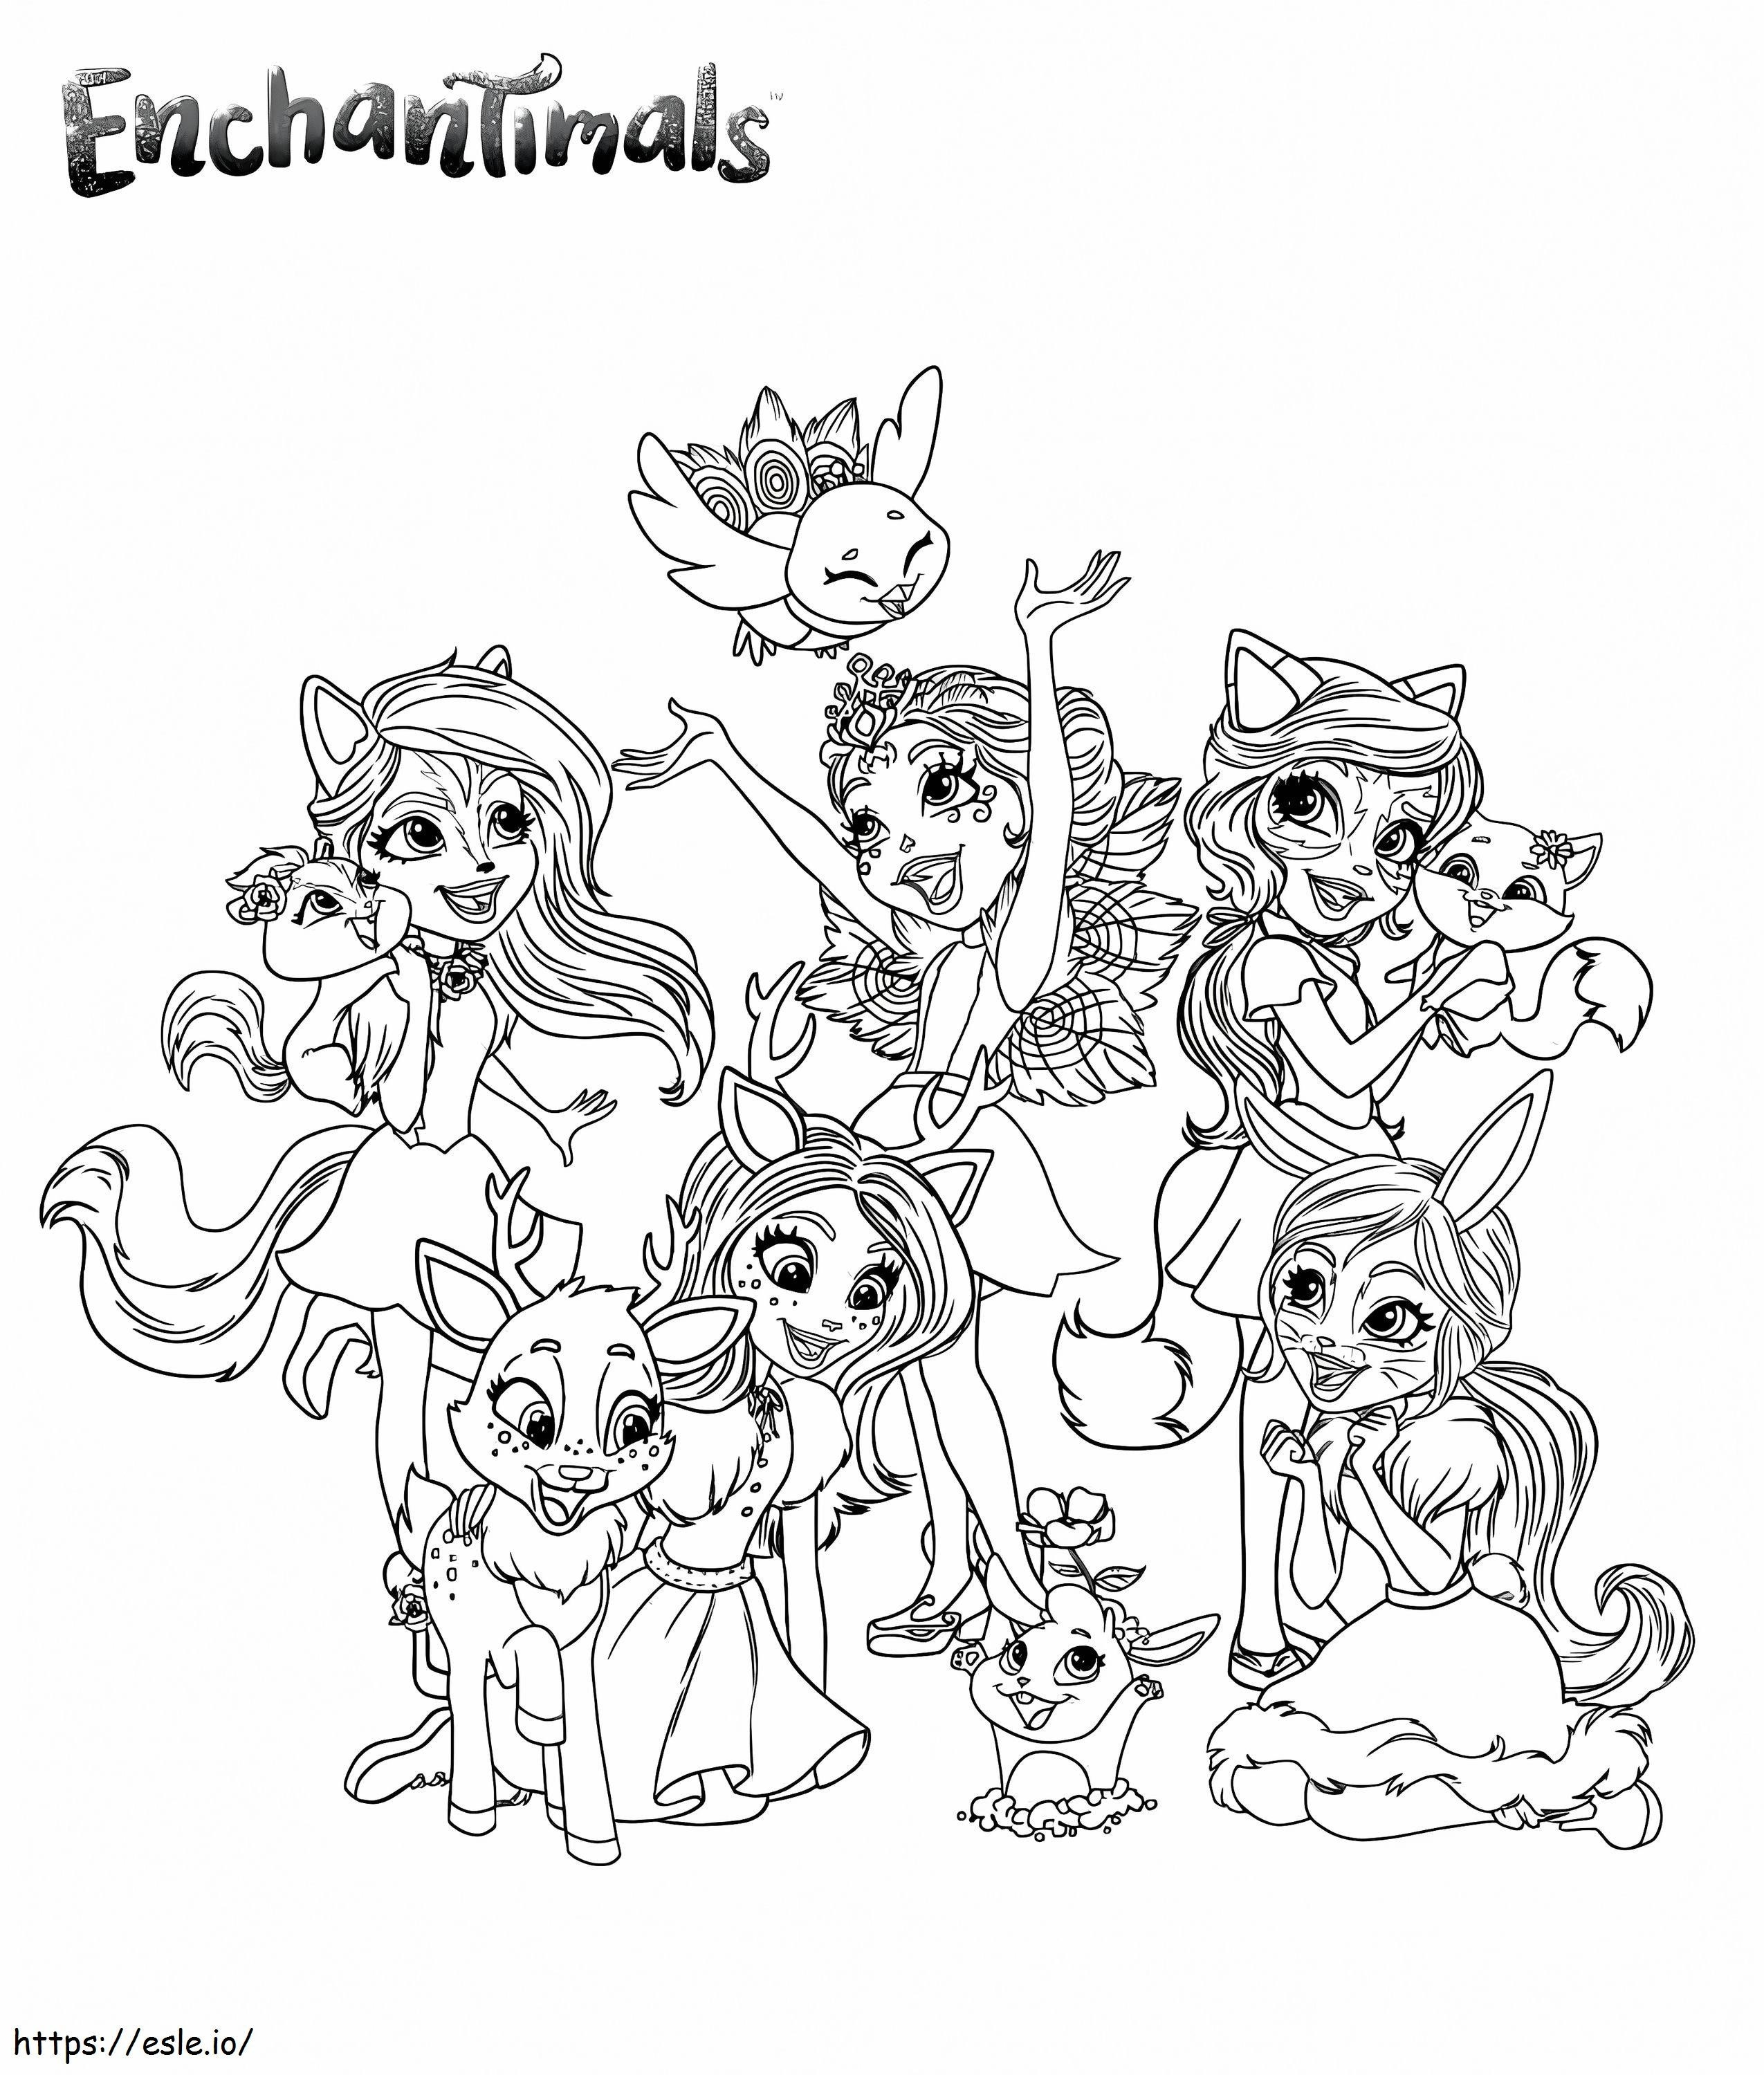 Free Printable Enchantimals coloring page